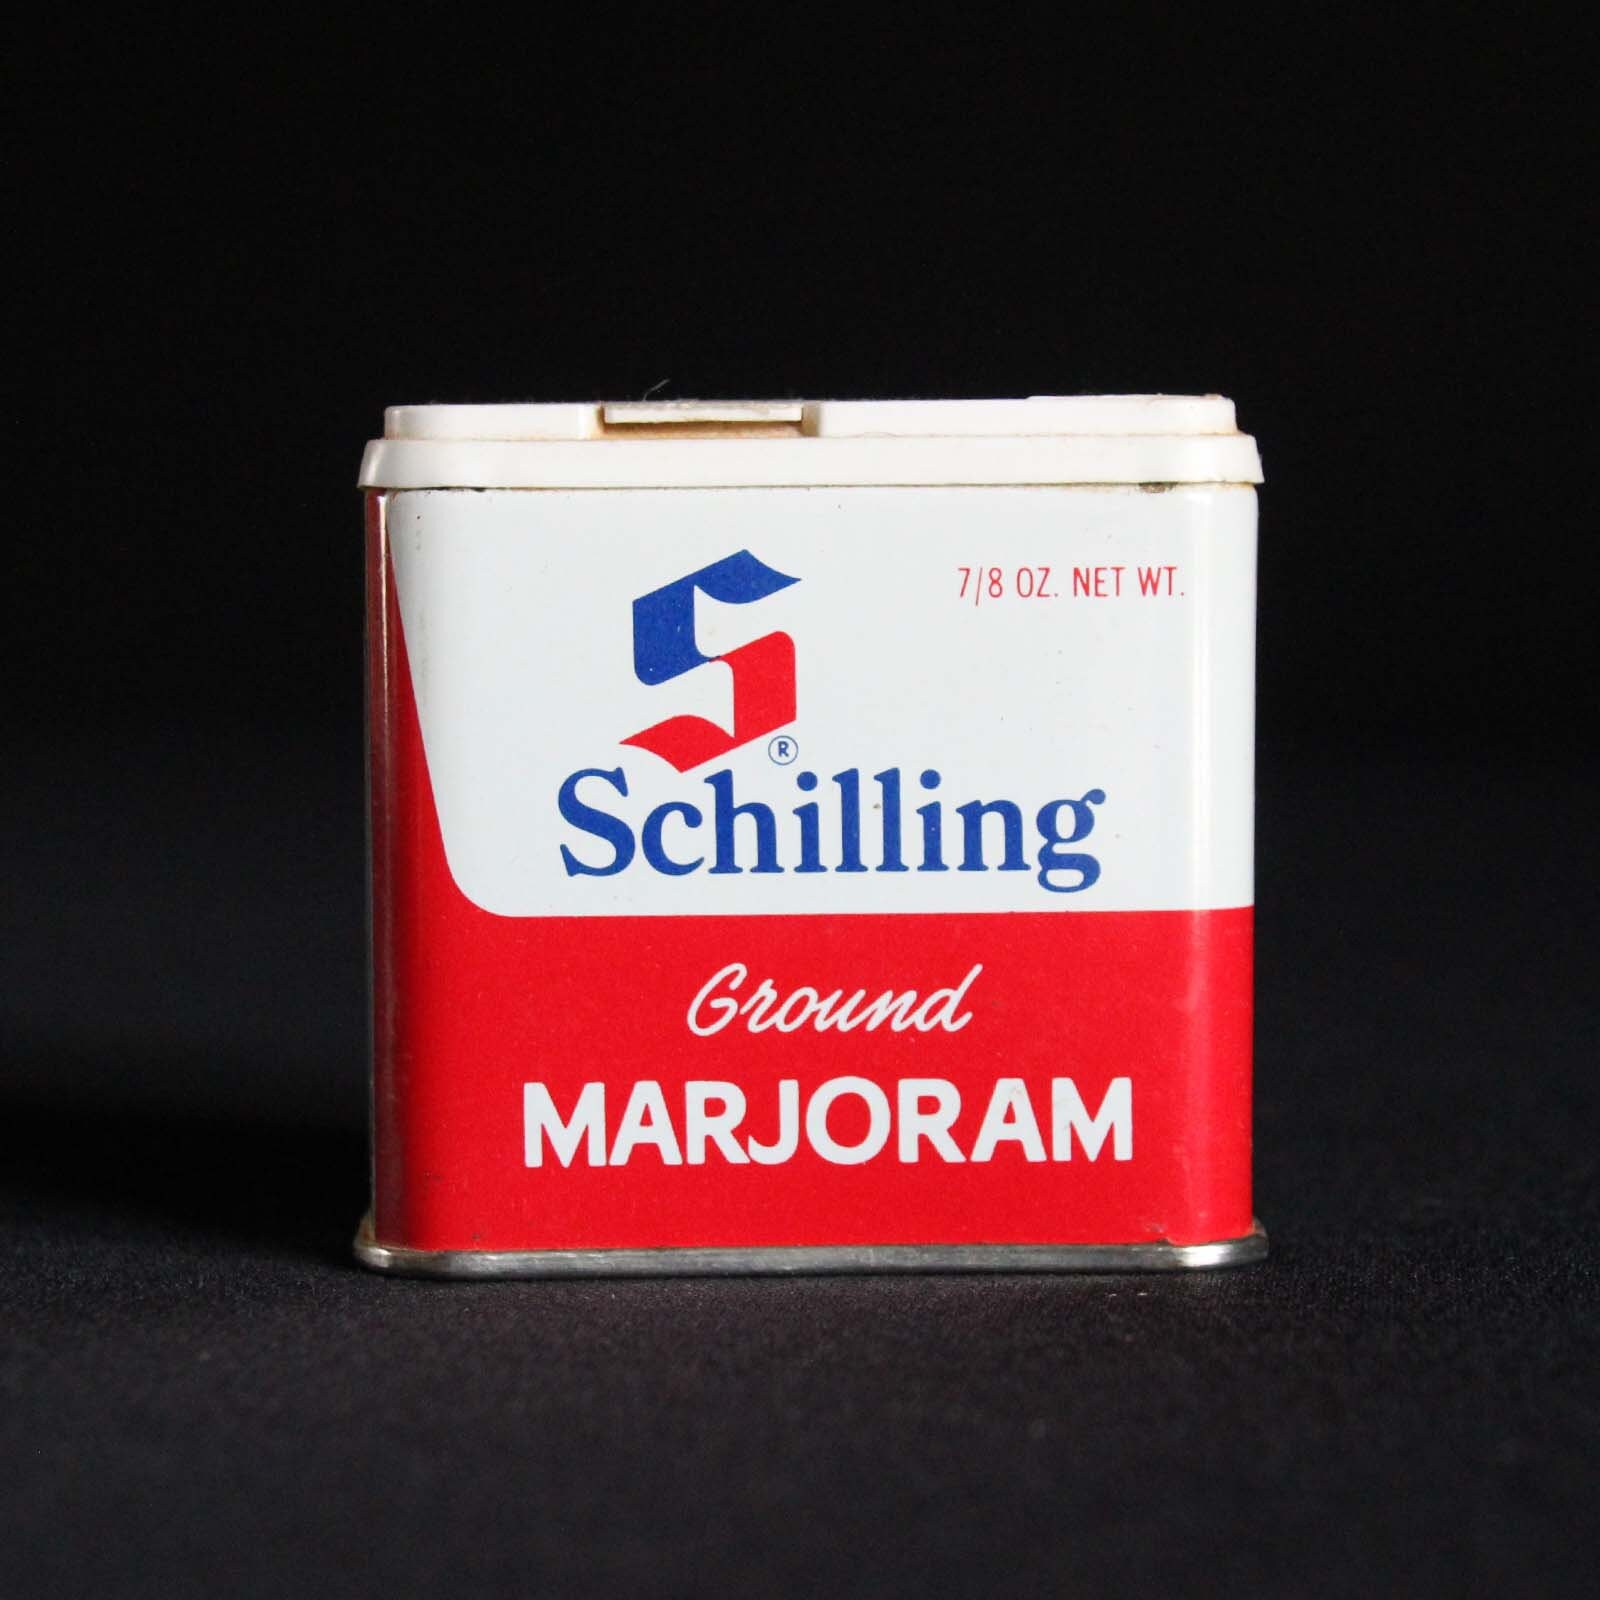 Vintage used Schilling spice tins